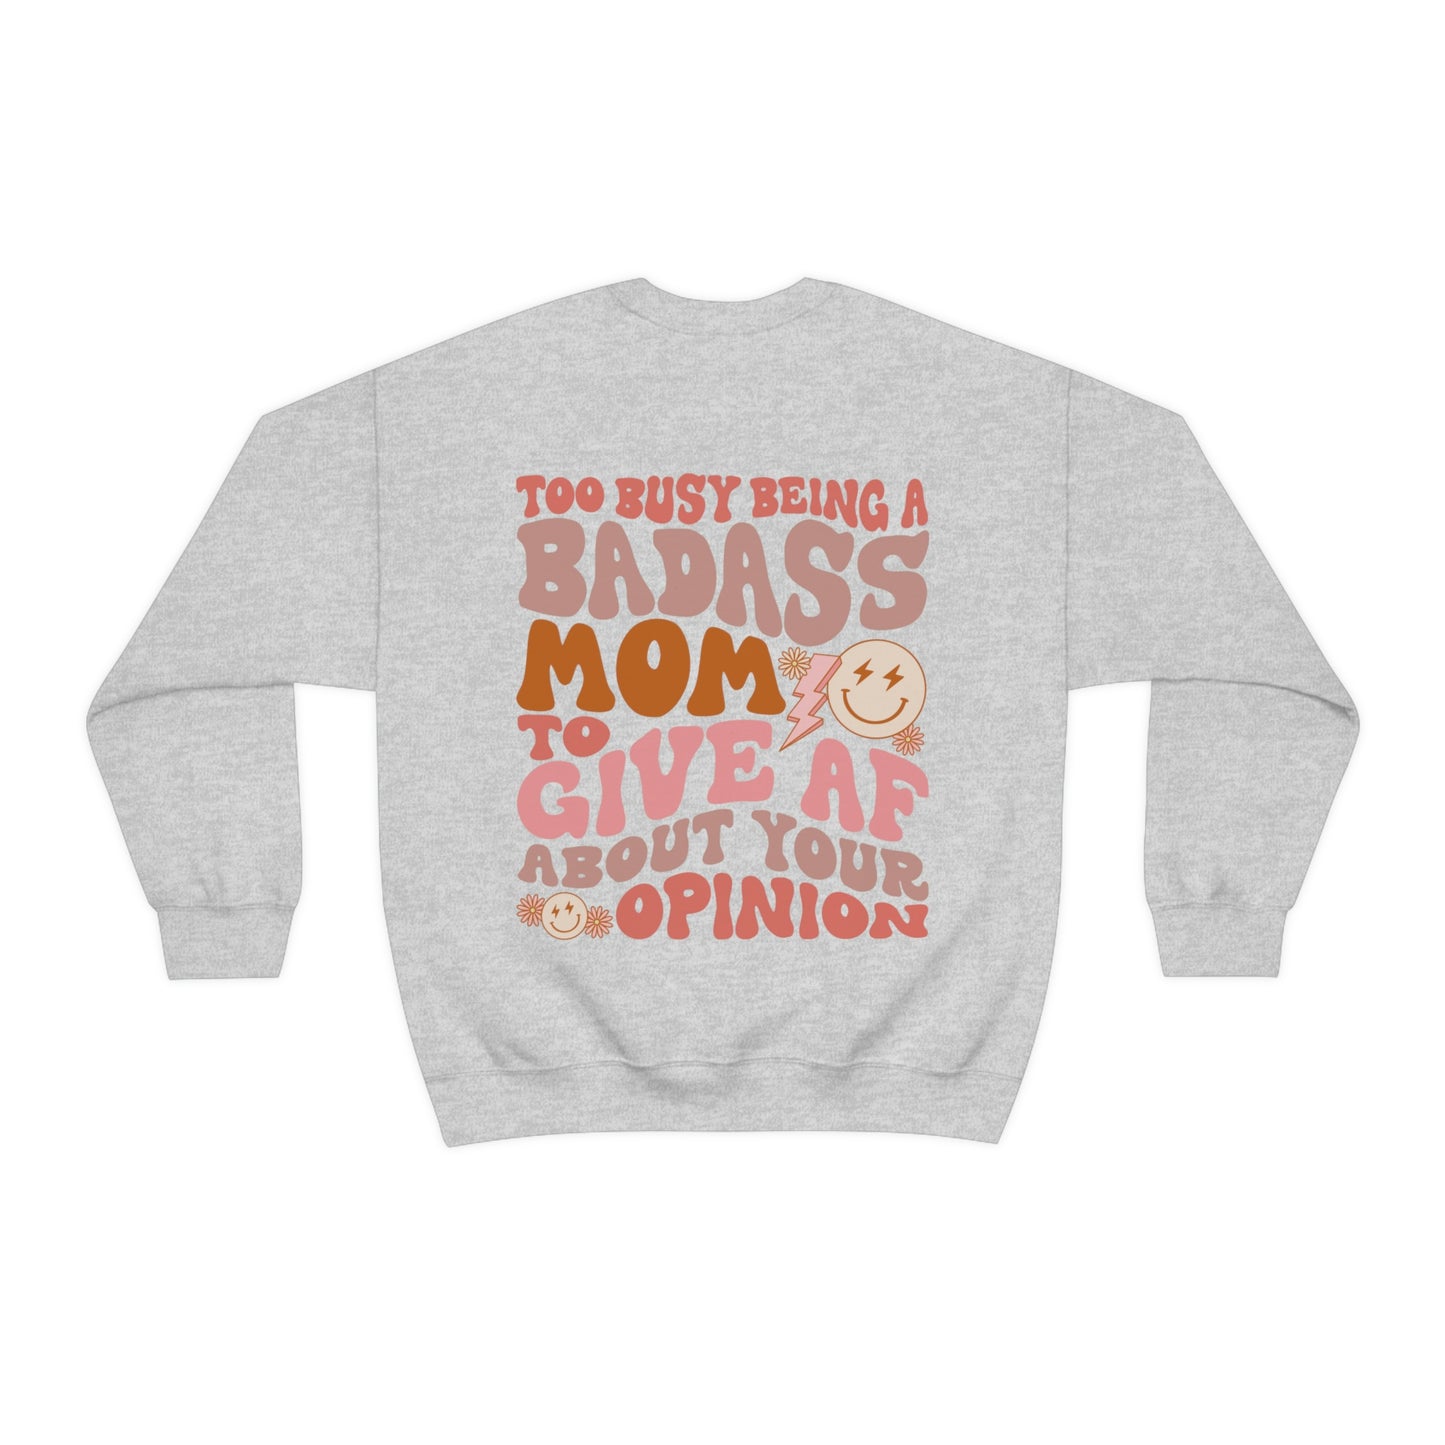 Badass Mom Sweatshirt